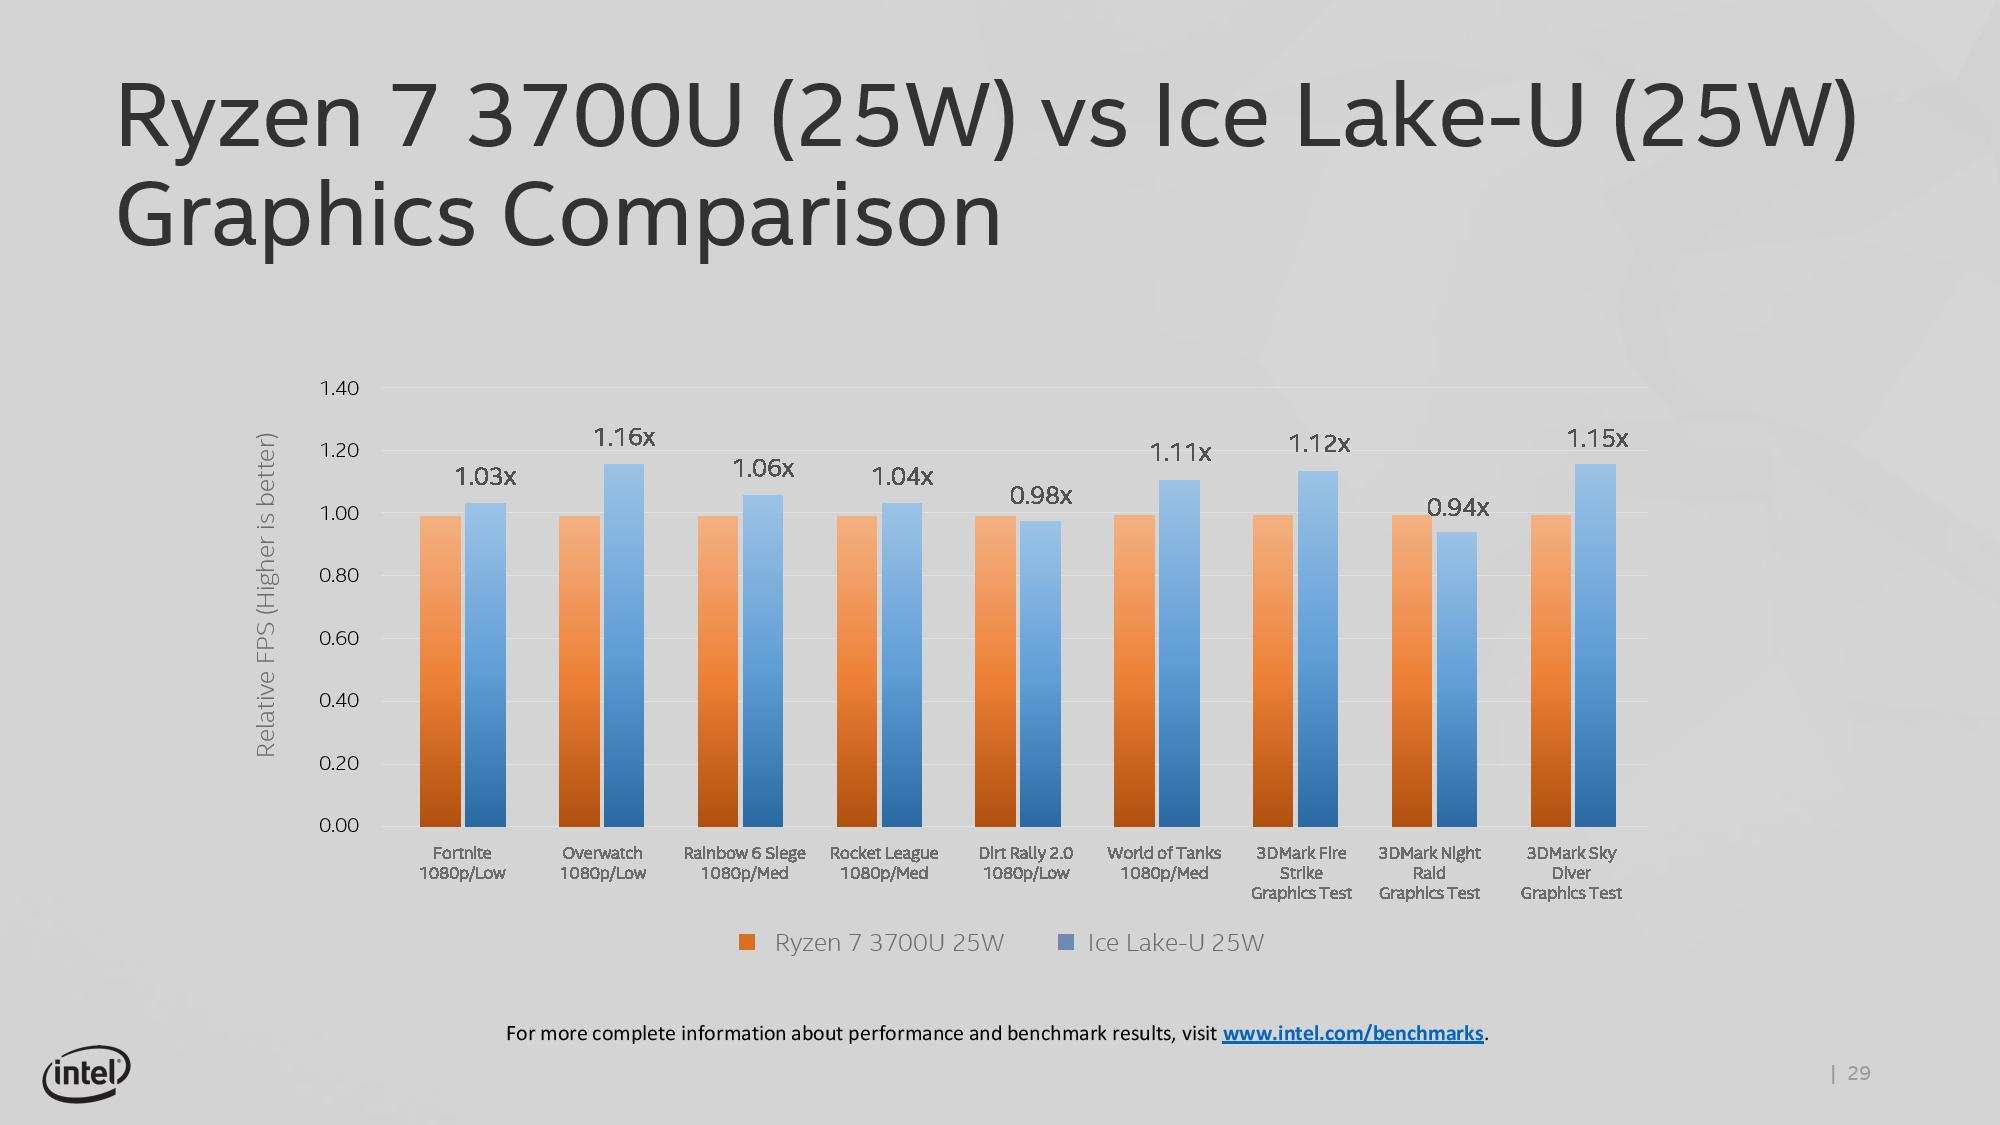 Intel Ice Lake-U vs. Ryzen 7 3700U graphics performance.